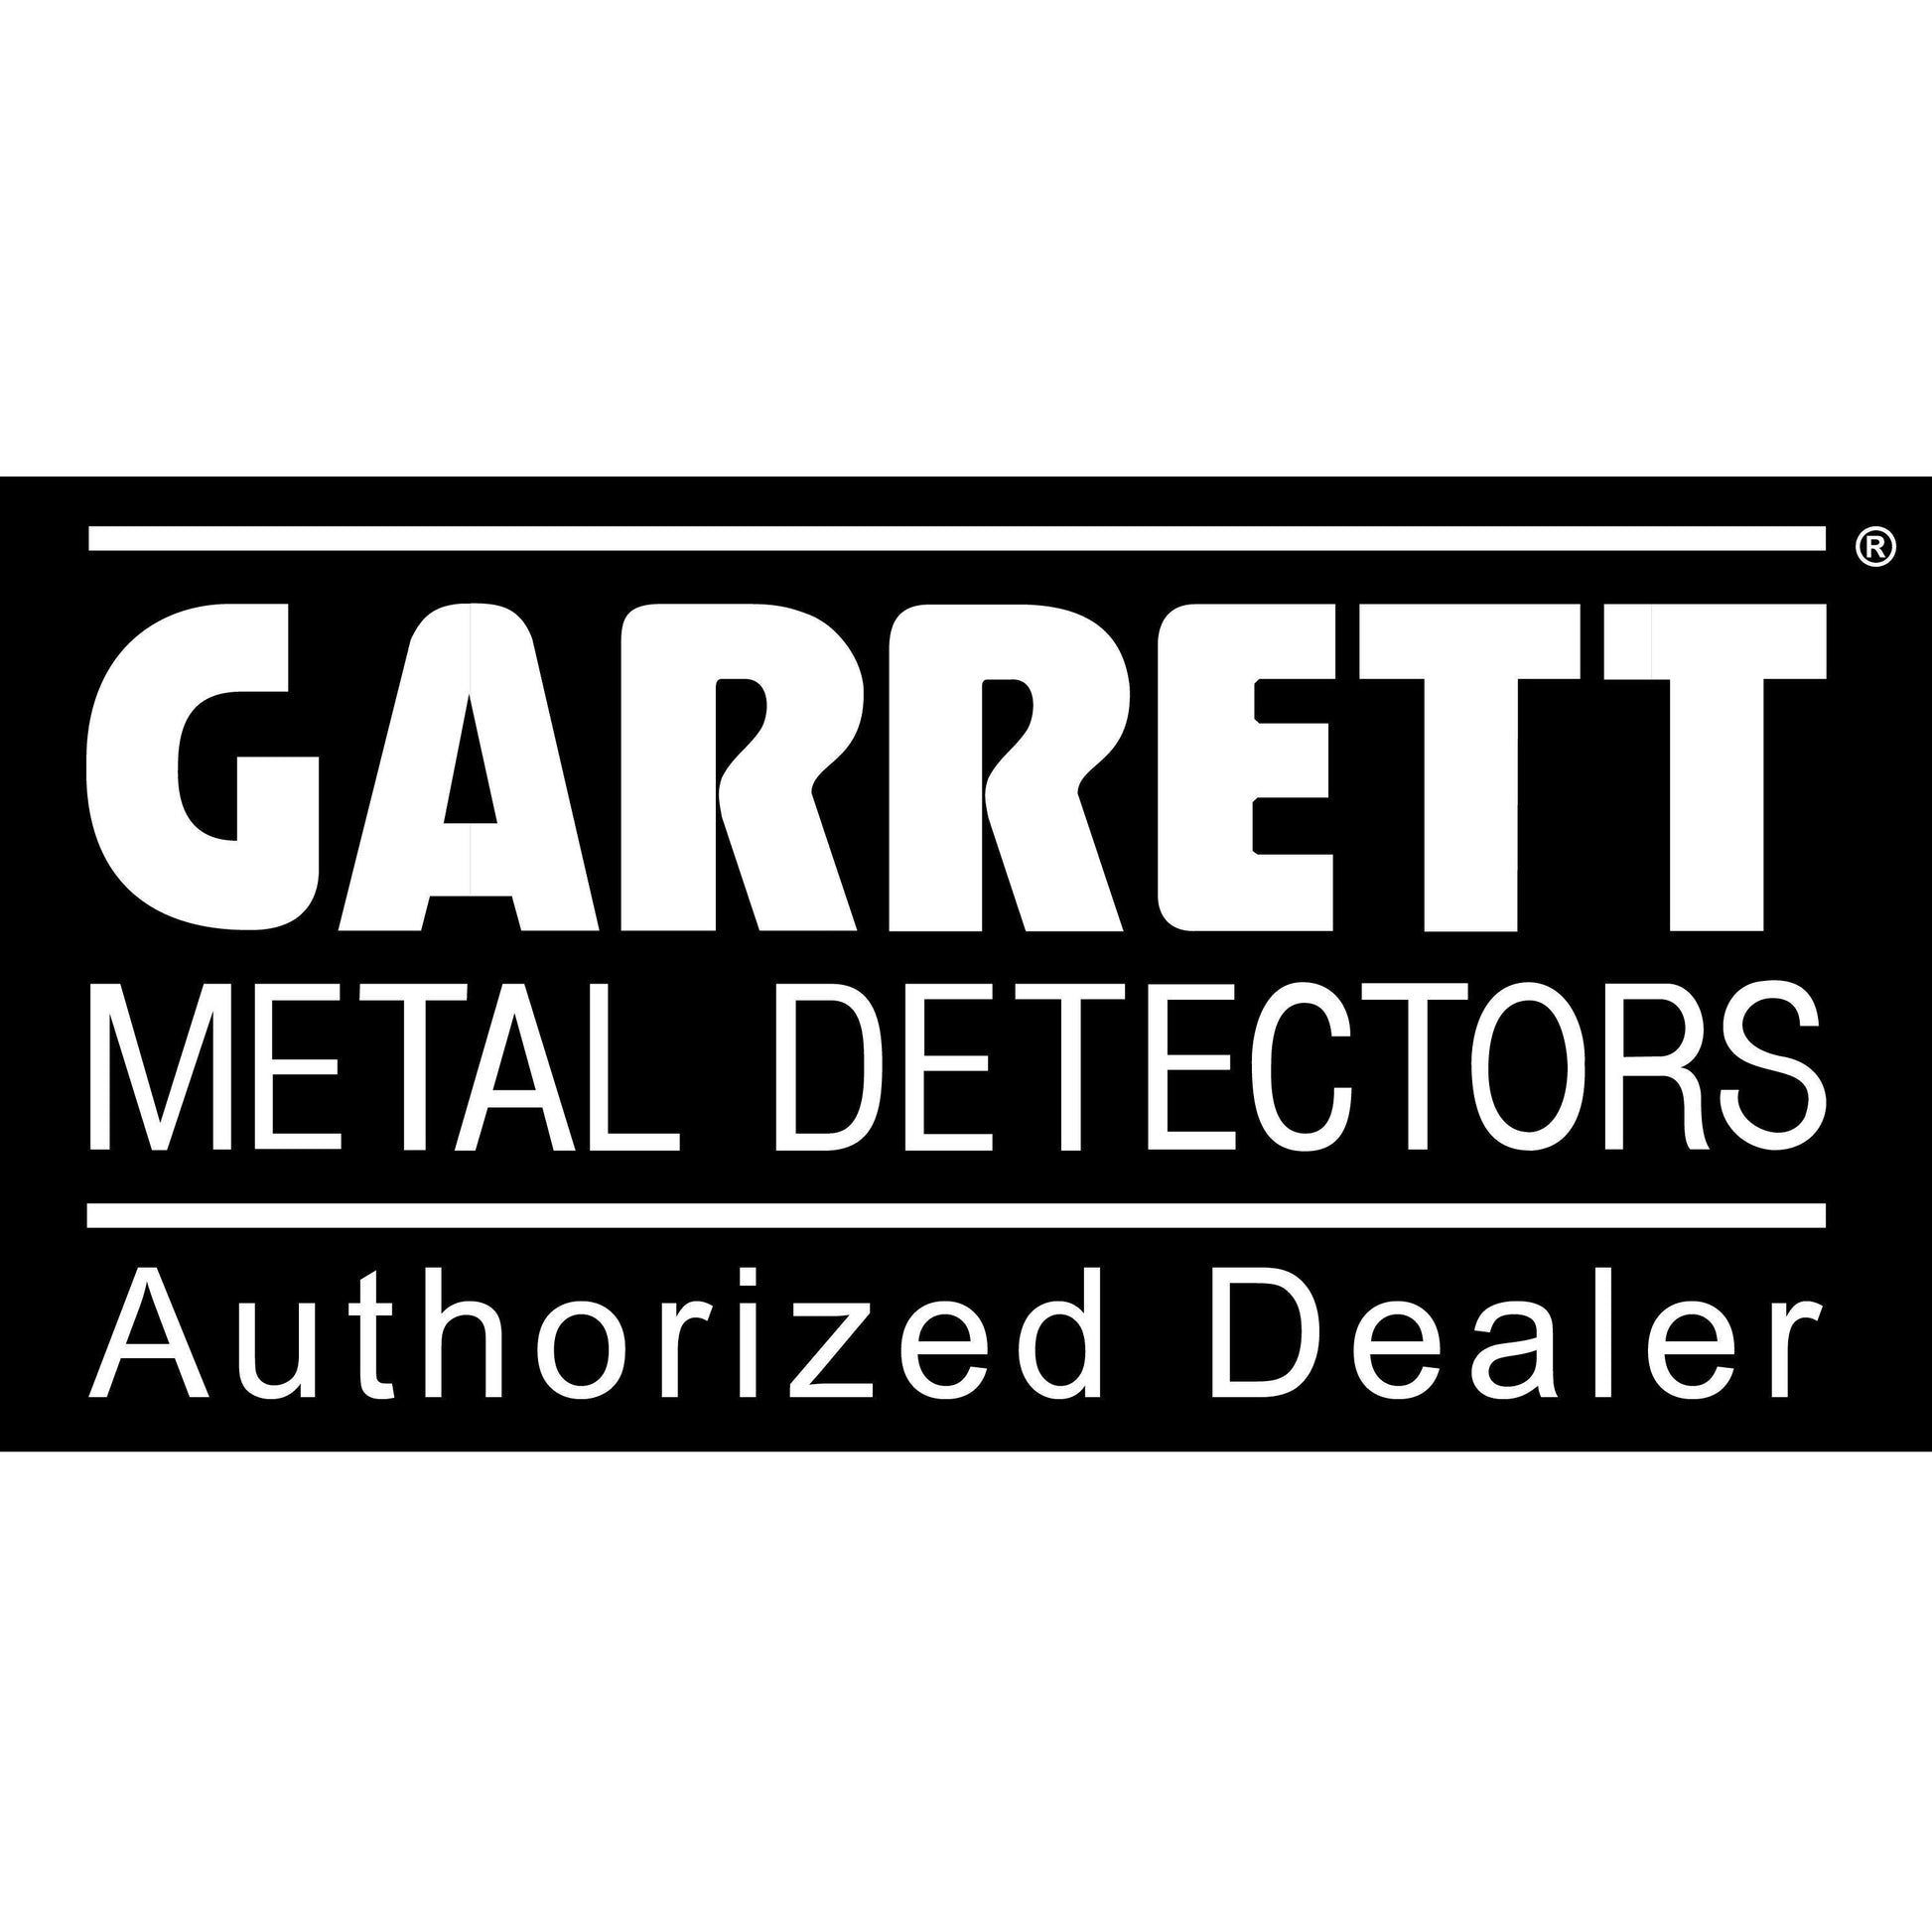 Garrett AT Pro Metal Detector MS-2 Land Headphone, Pro Pointer, All-Purpose Carry Bag, Digger, and Gloves-Destination Gold Detectors